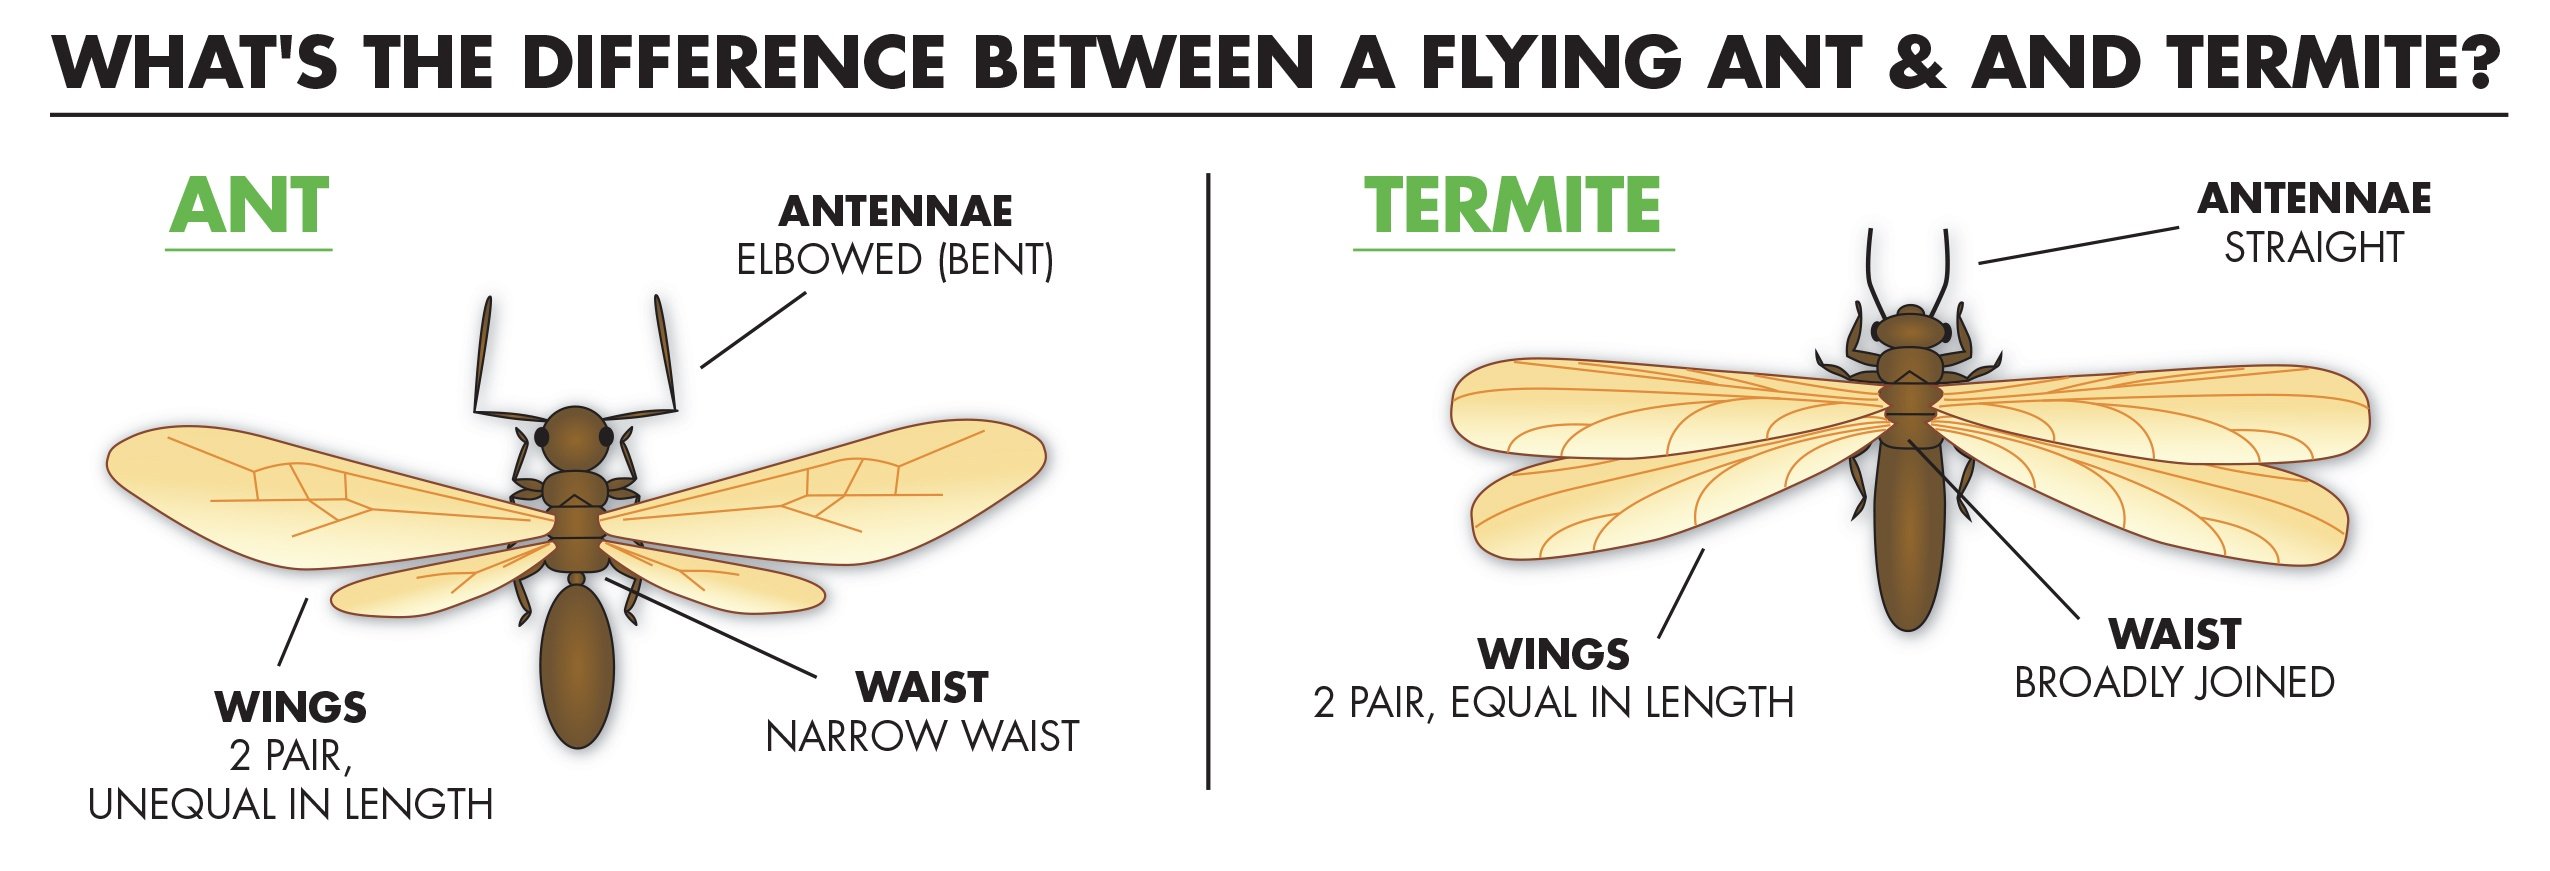 winged termites